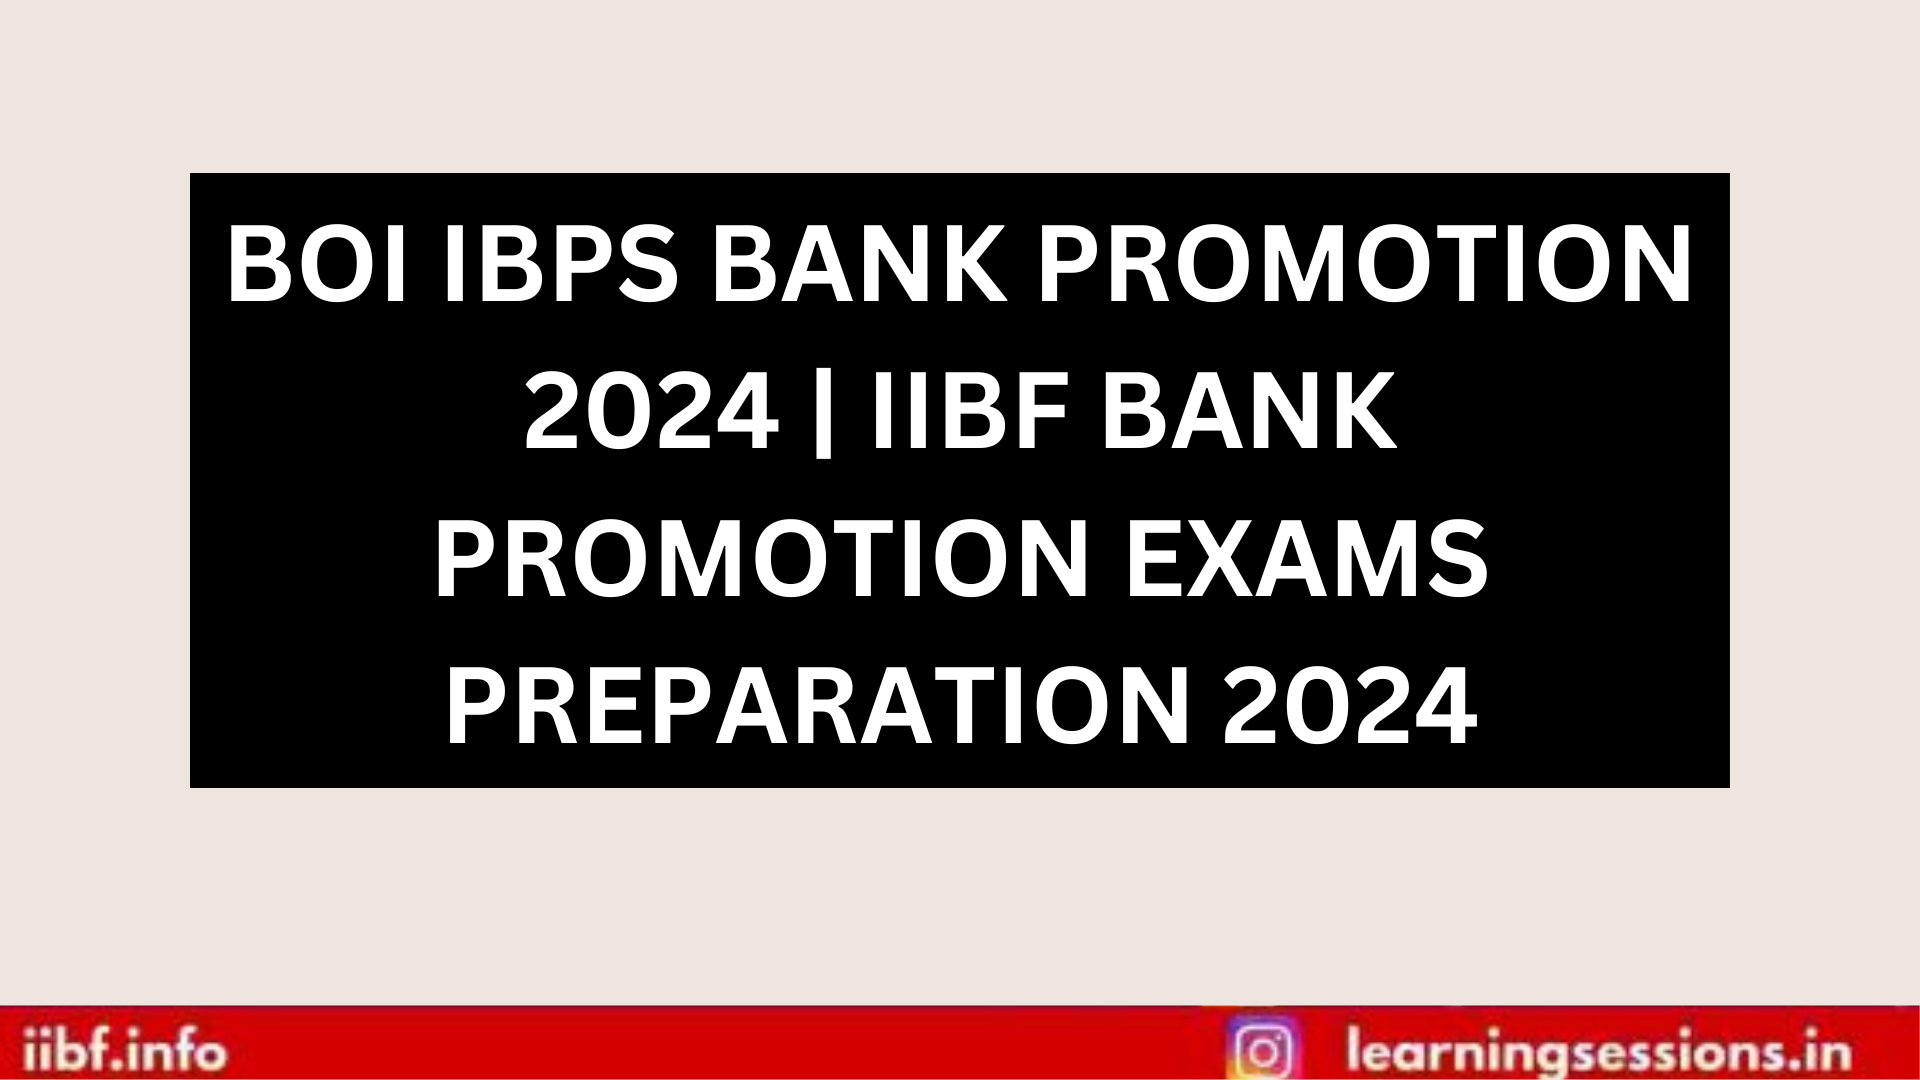 BOI IBPS BANK PROMOTION 2024 | IIBF BANK PROMOTION EXAMS PREPARATION 2024